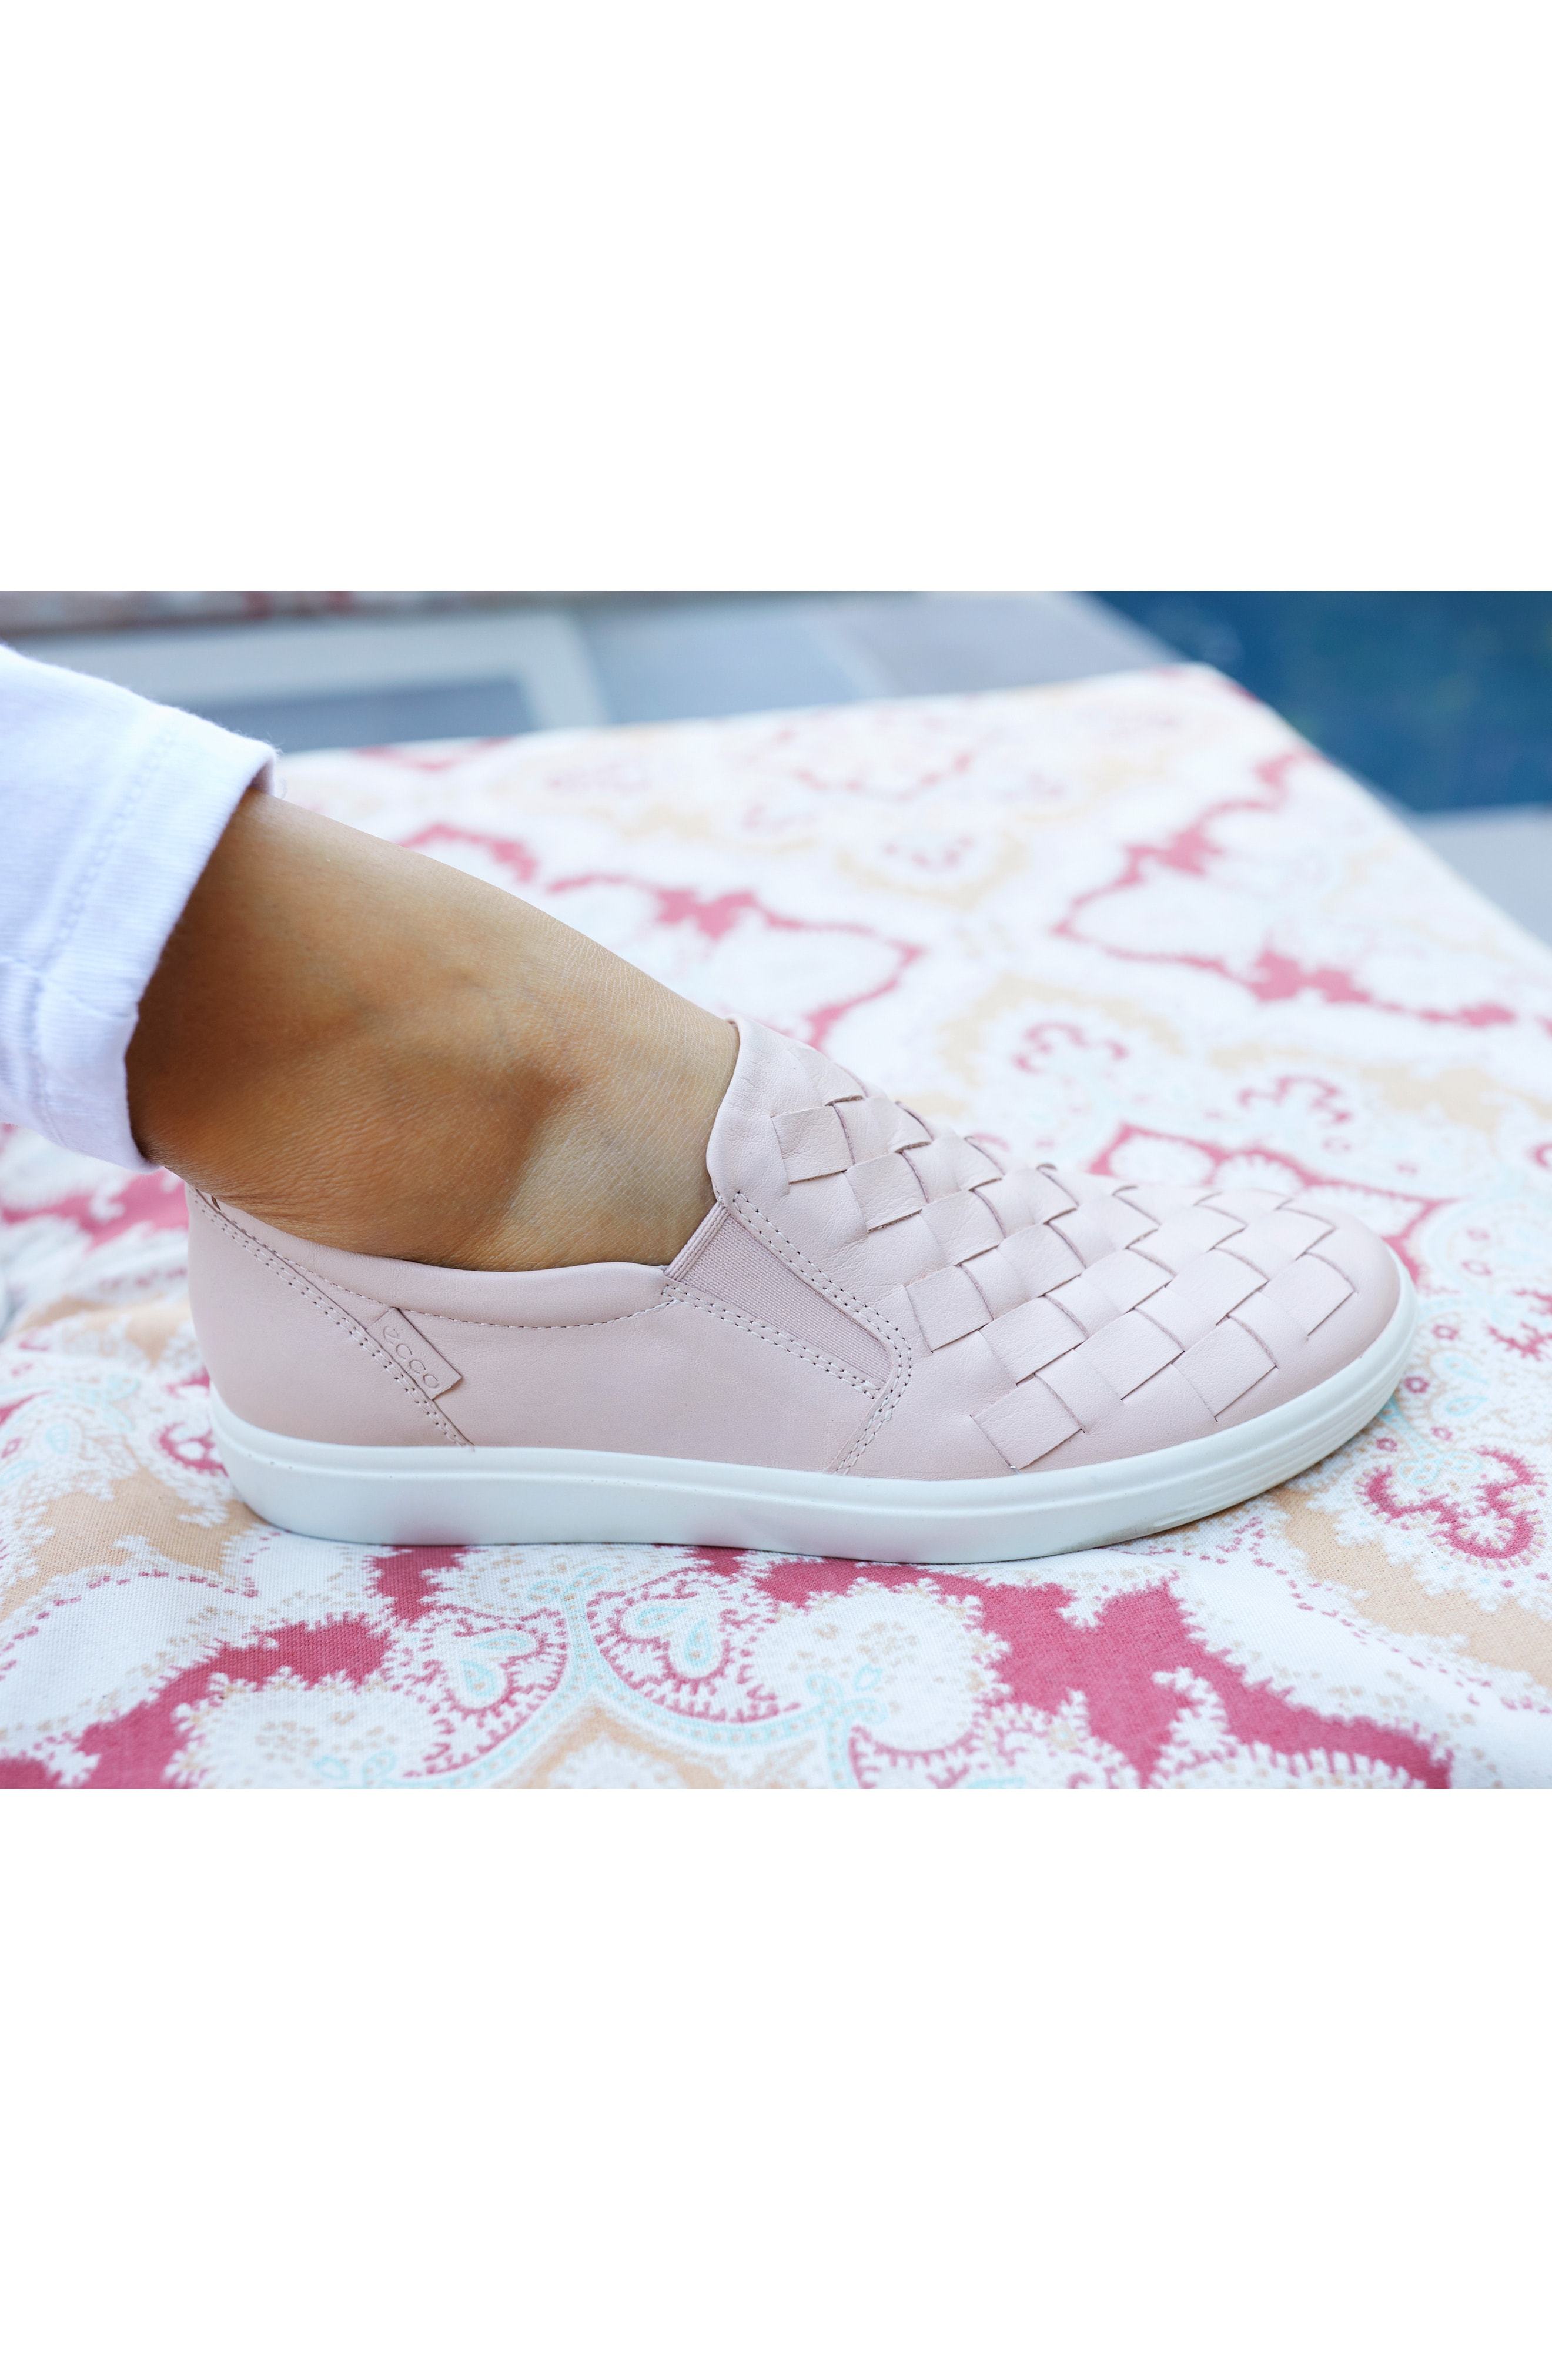 Ecco Soft 7 Woven Slip On Sneaker, $63 